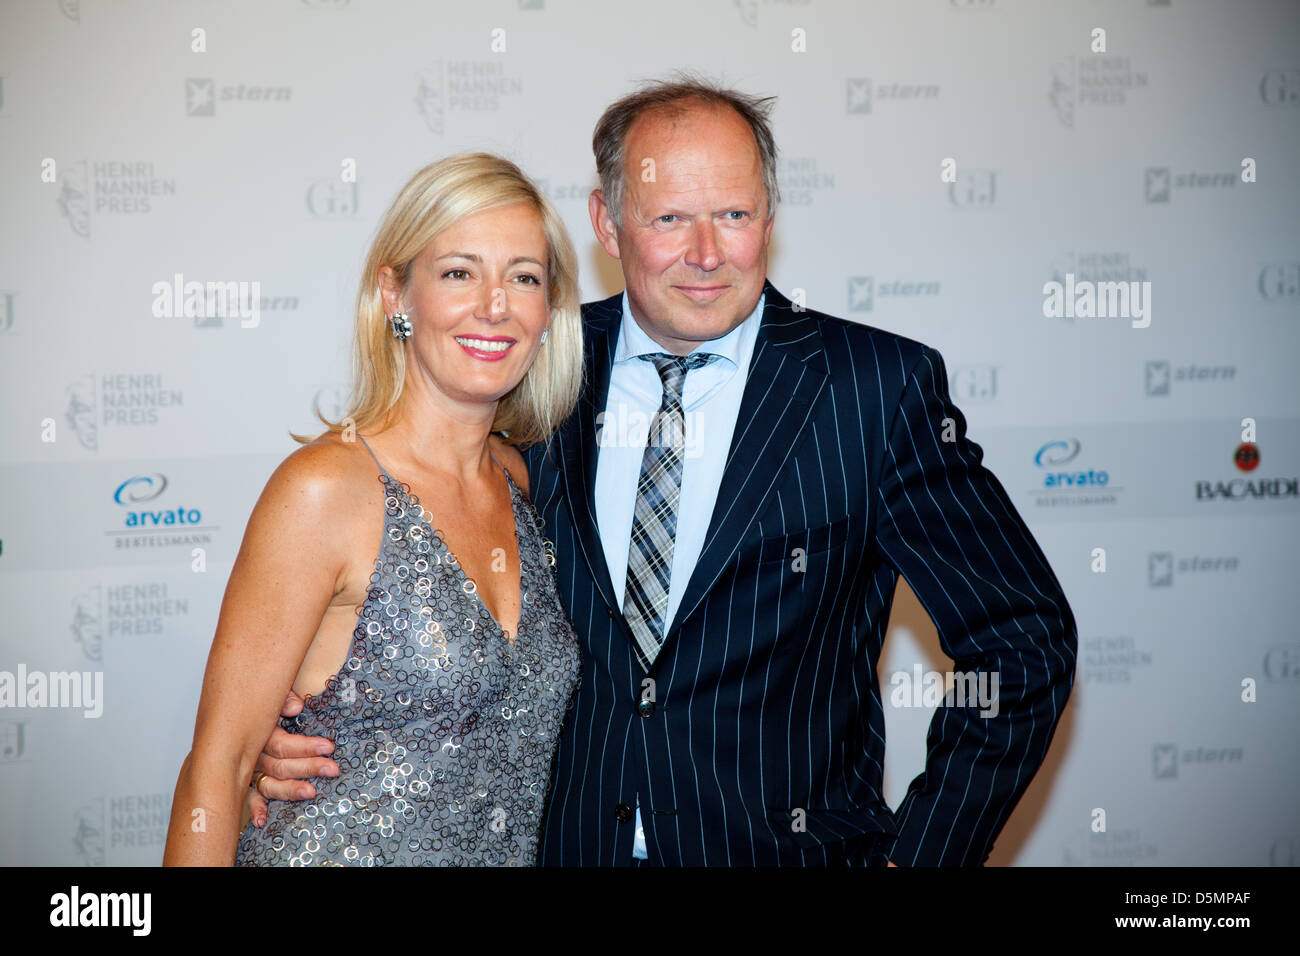 Axel Milberg e moglie presso la Henry Nannen Preis award a Hamburger Schauspielhaus di Amburgo, Germania - 06.05.2011 Foto Stock